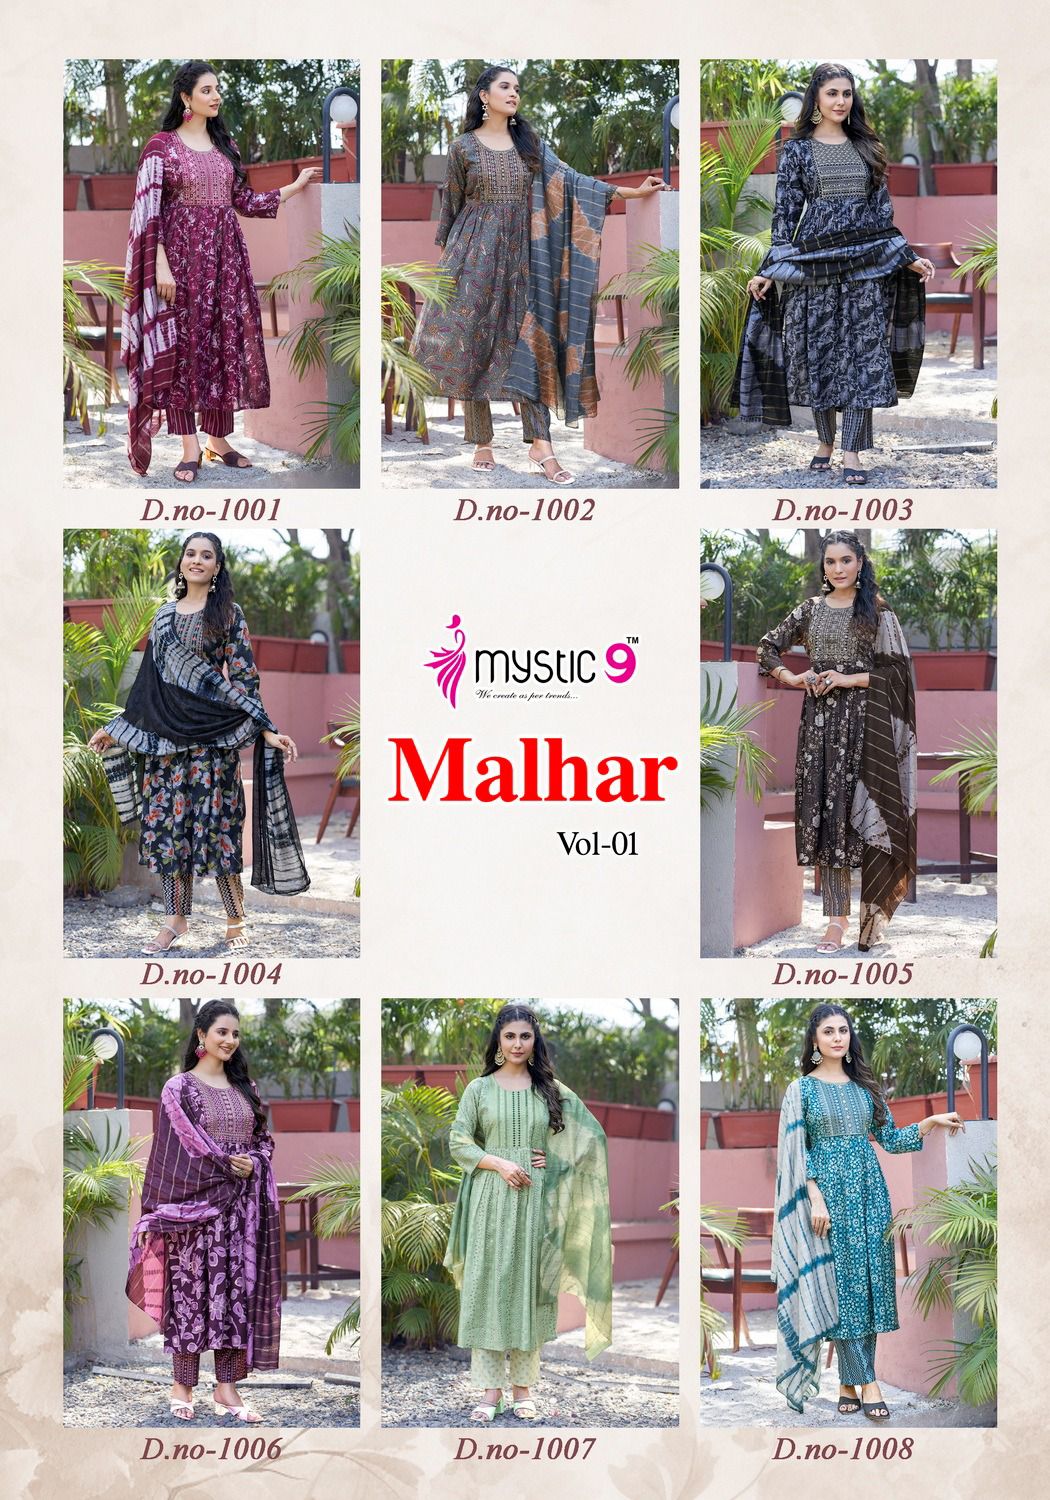 Mystic 9 Malhar Vol 01 collection 2